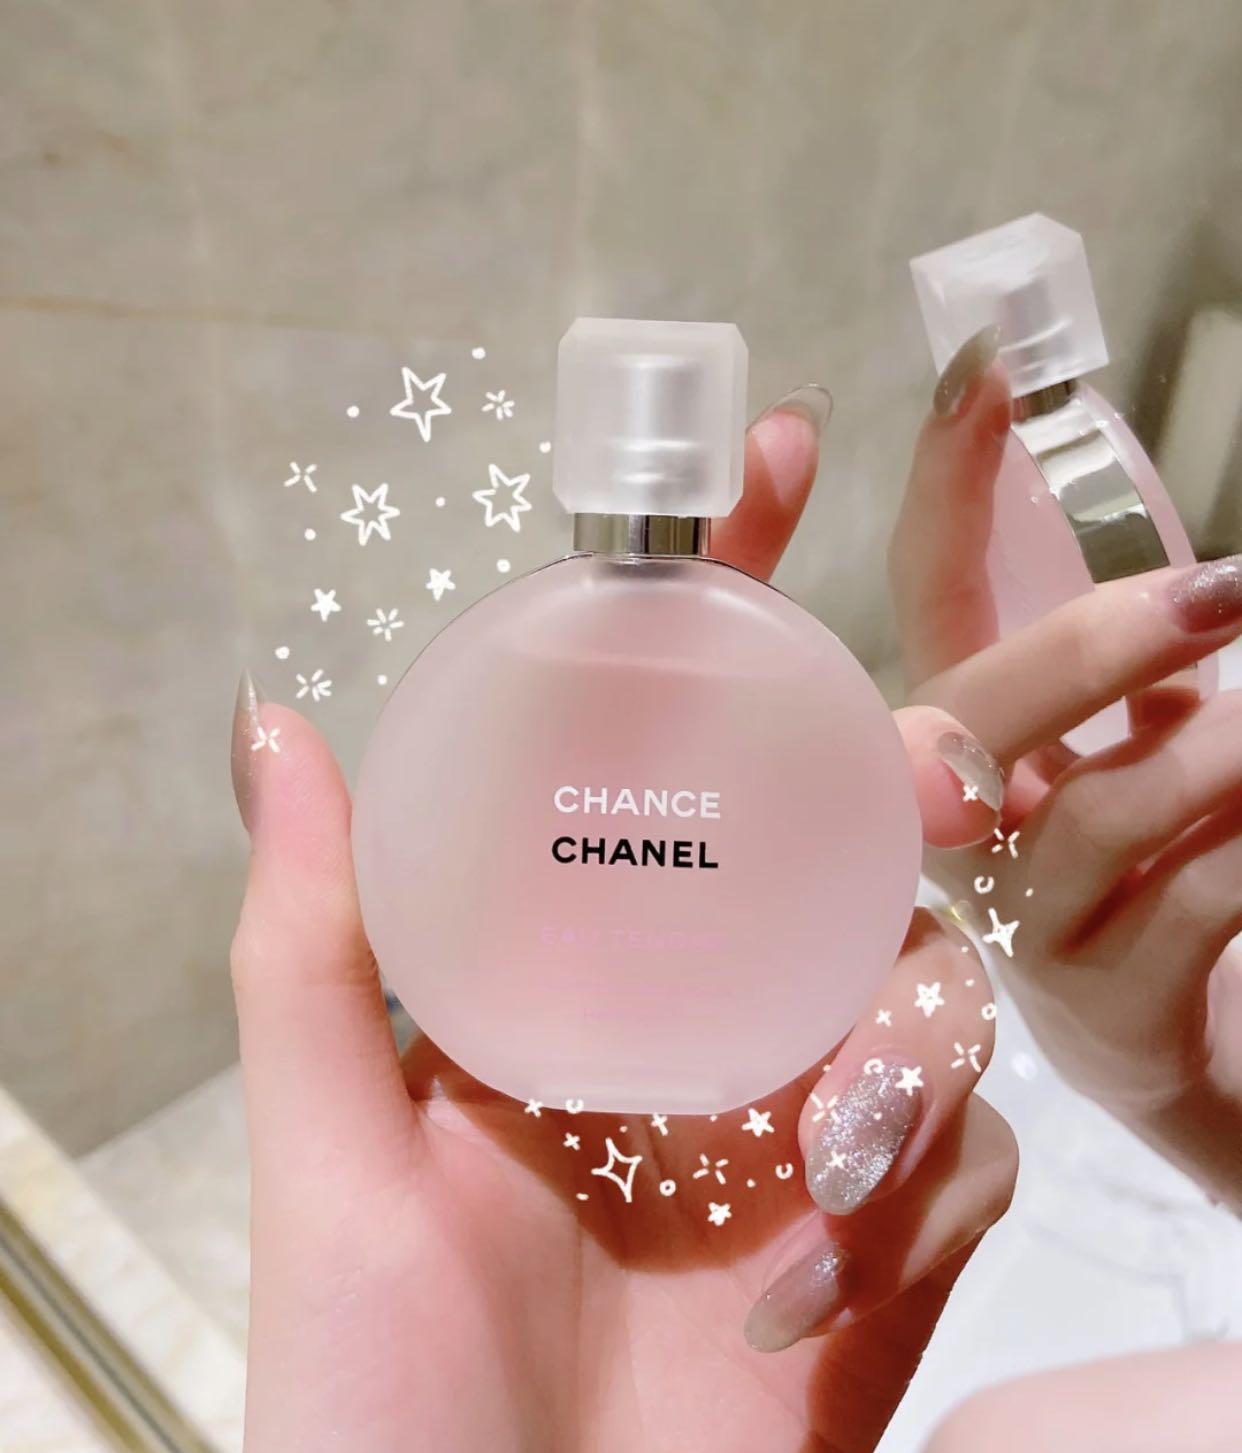 Chance Hair Mist Chanel perfume - a fragrance for women